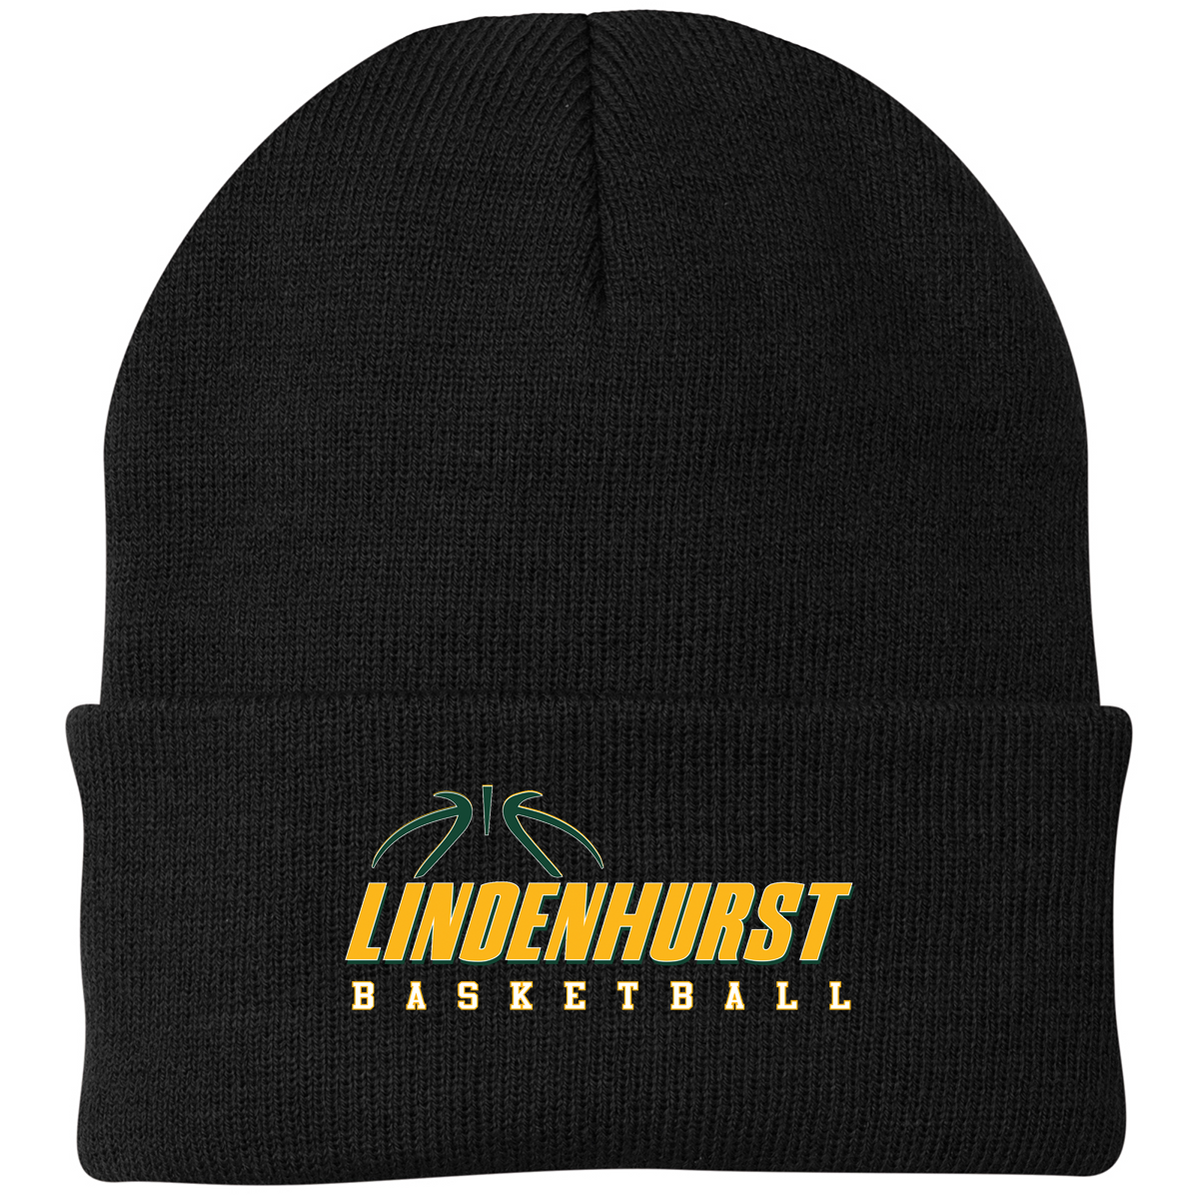 Lindenhurst Basketball Knit Beanie